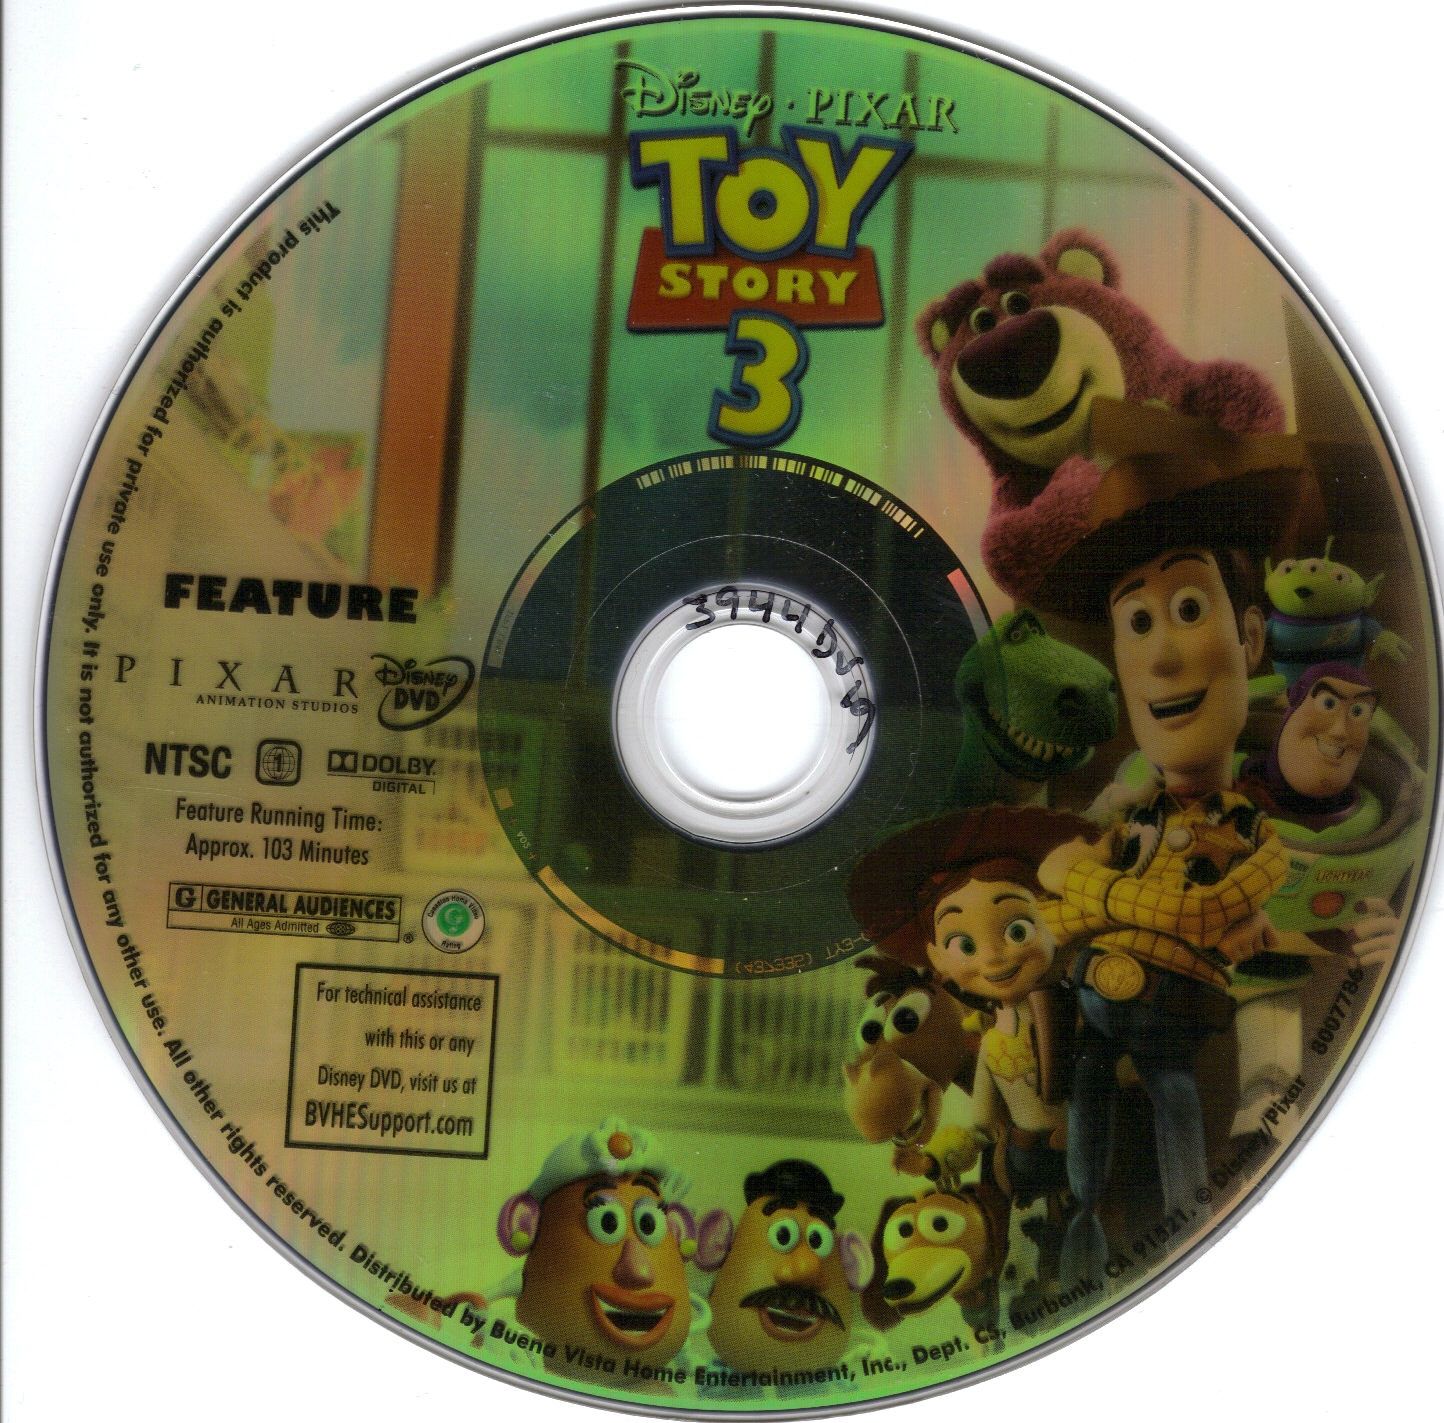 Toy story 3 Zone 1